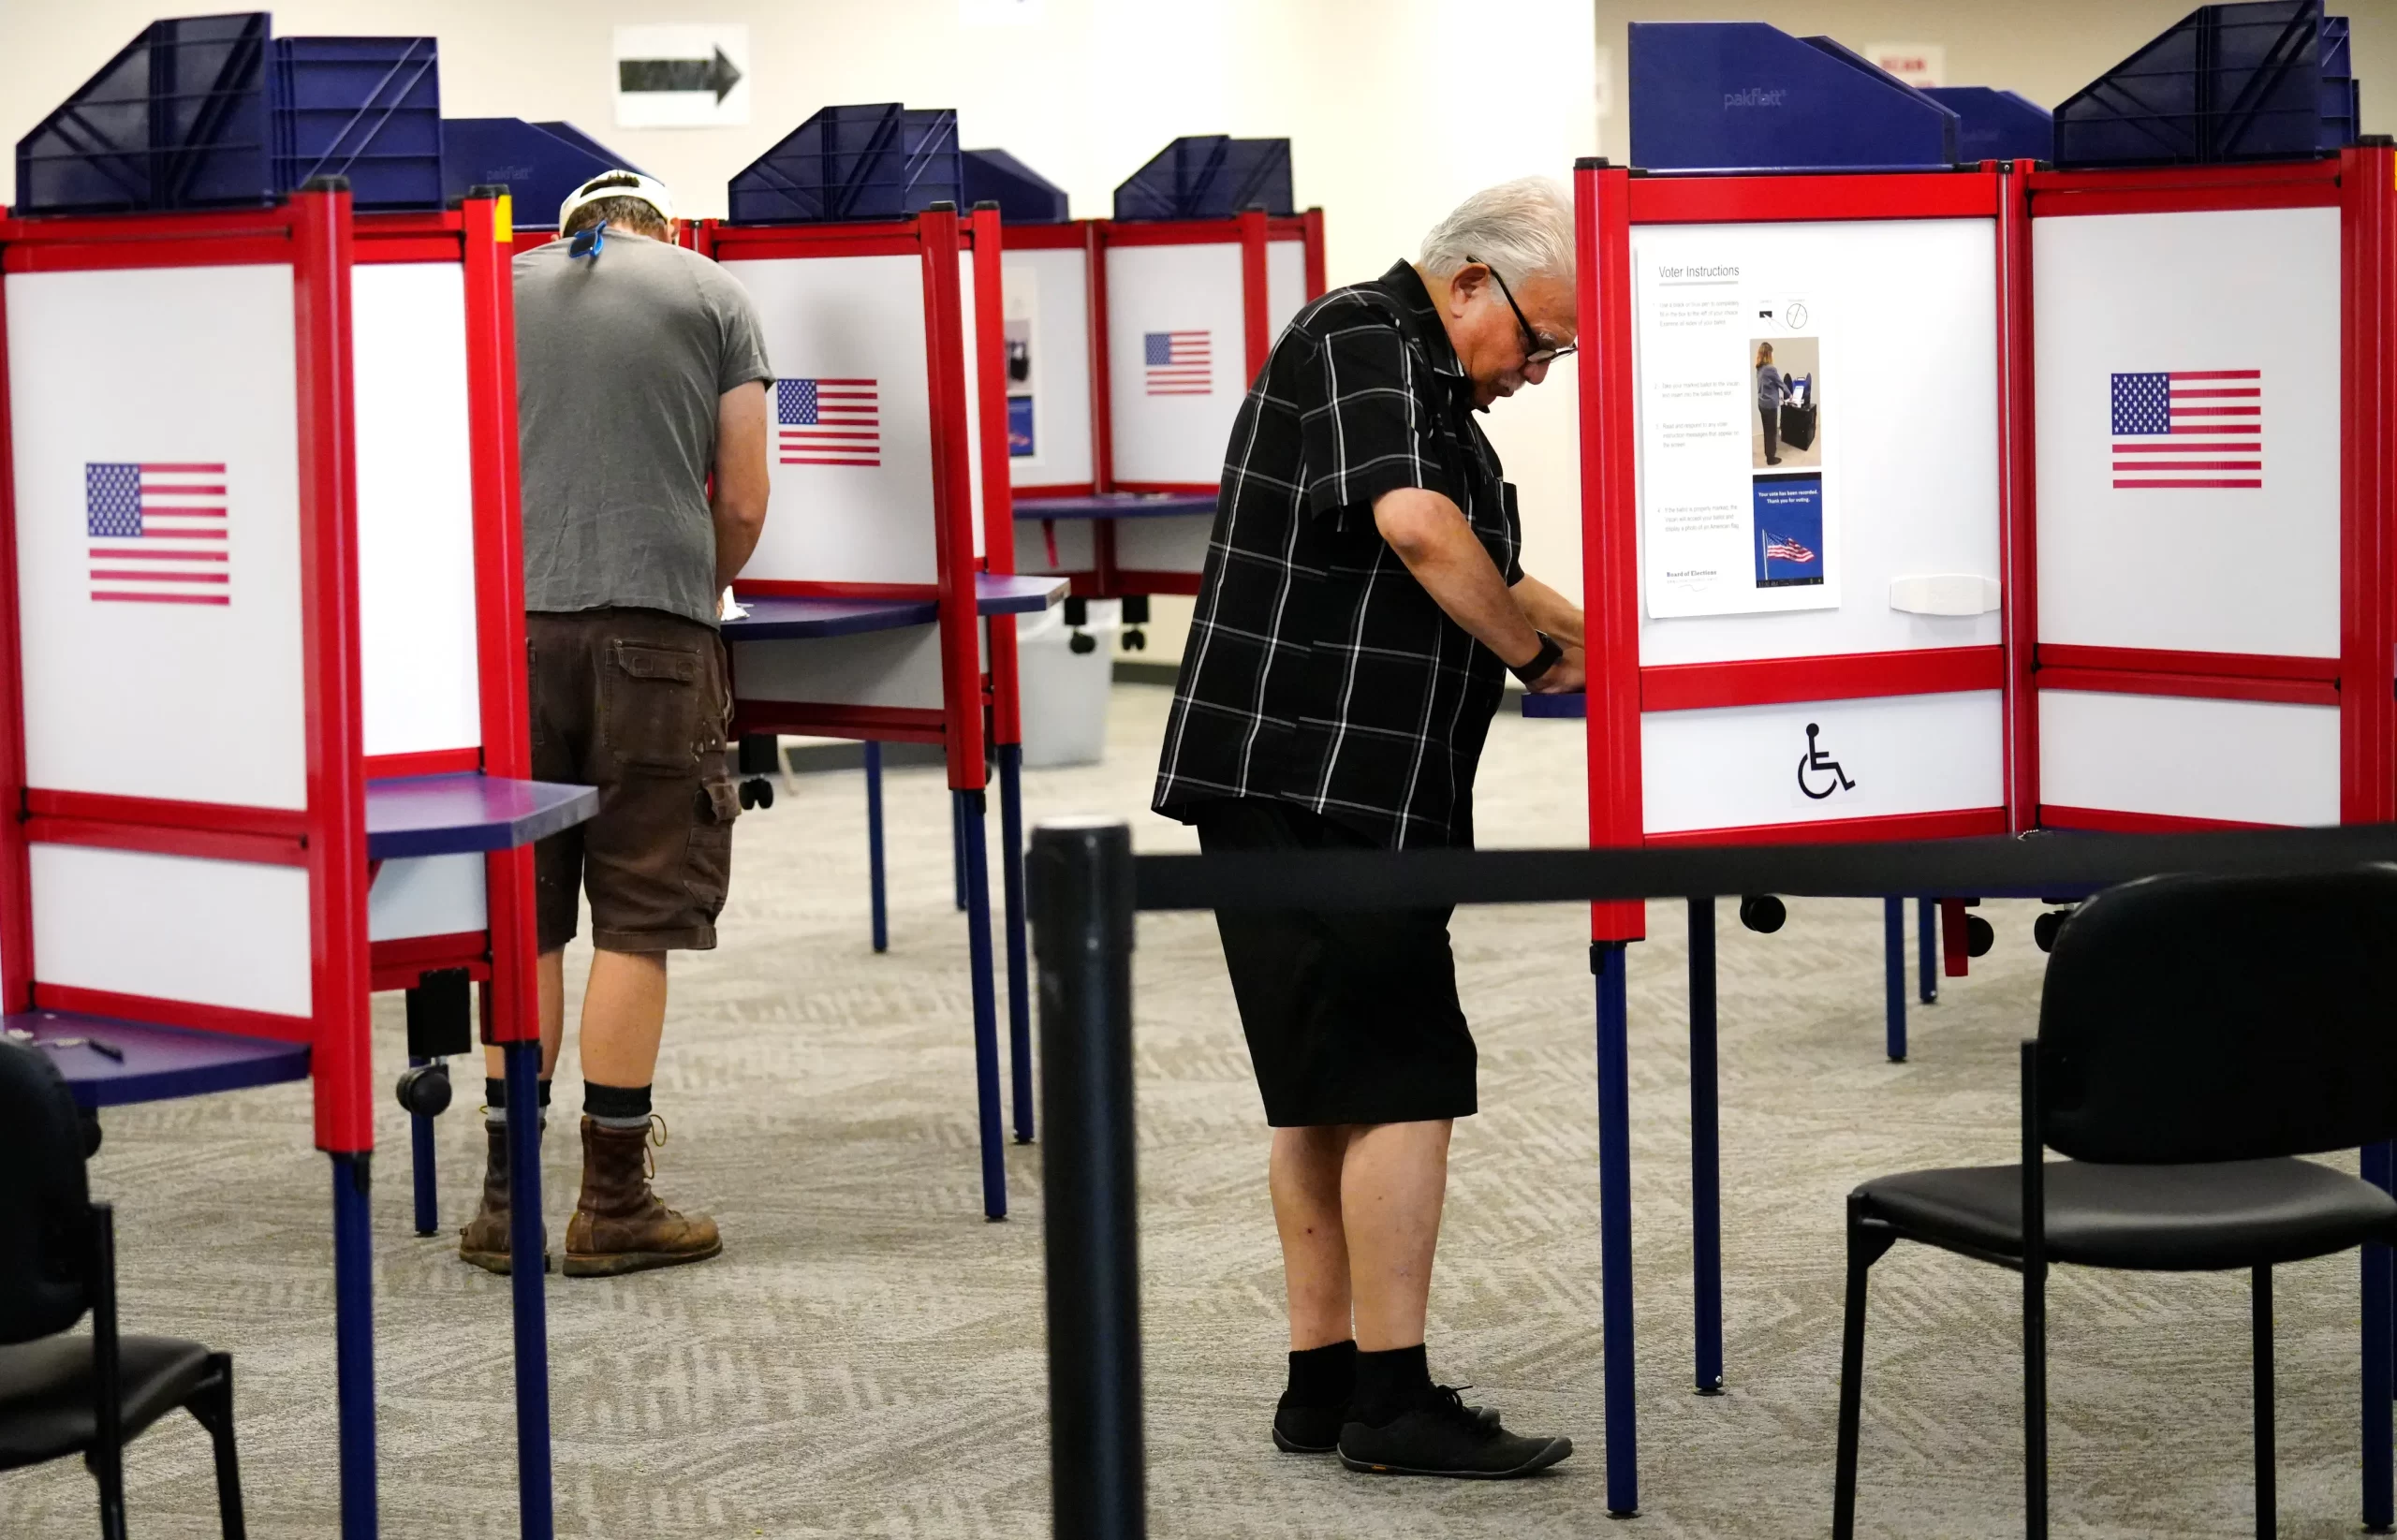 ओहियो का मुद्दा 1 प्रारंभिक मतदान वृद्धि: रिकॉर्ड मतदान में एक गहरा गोता